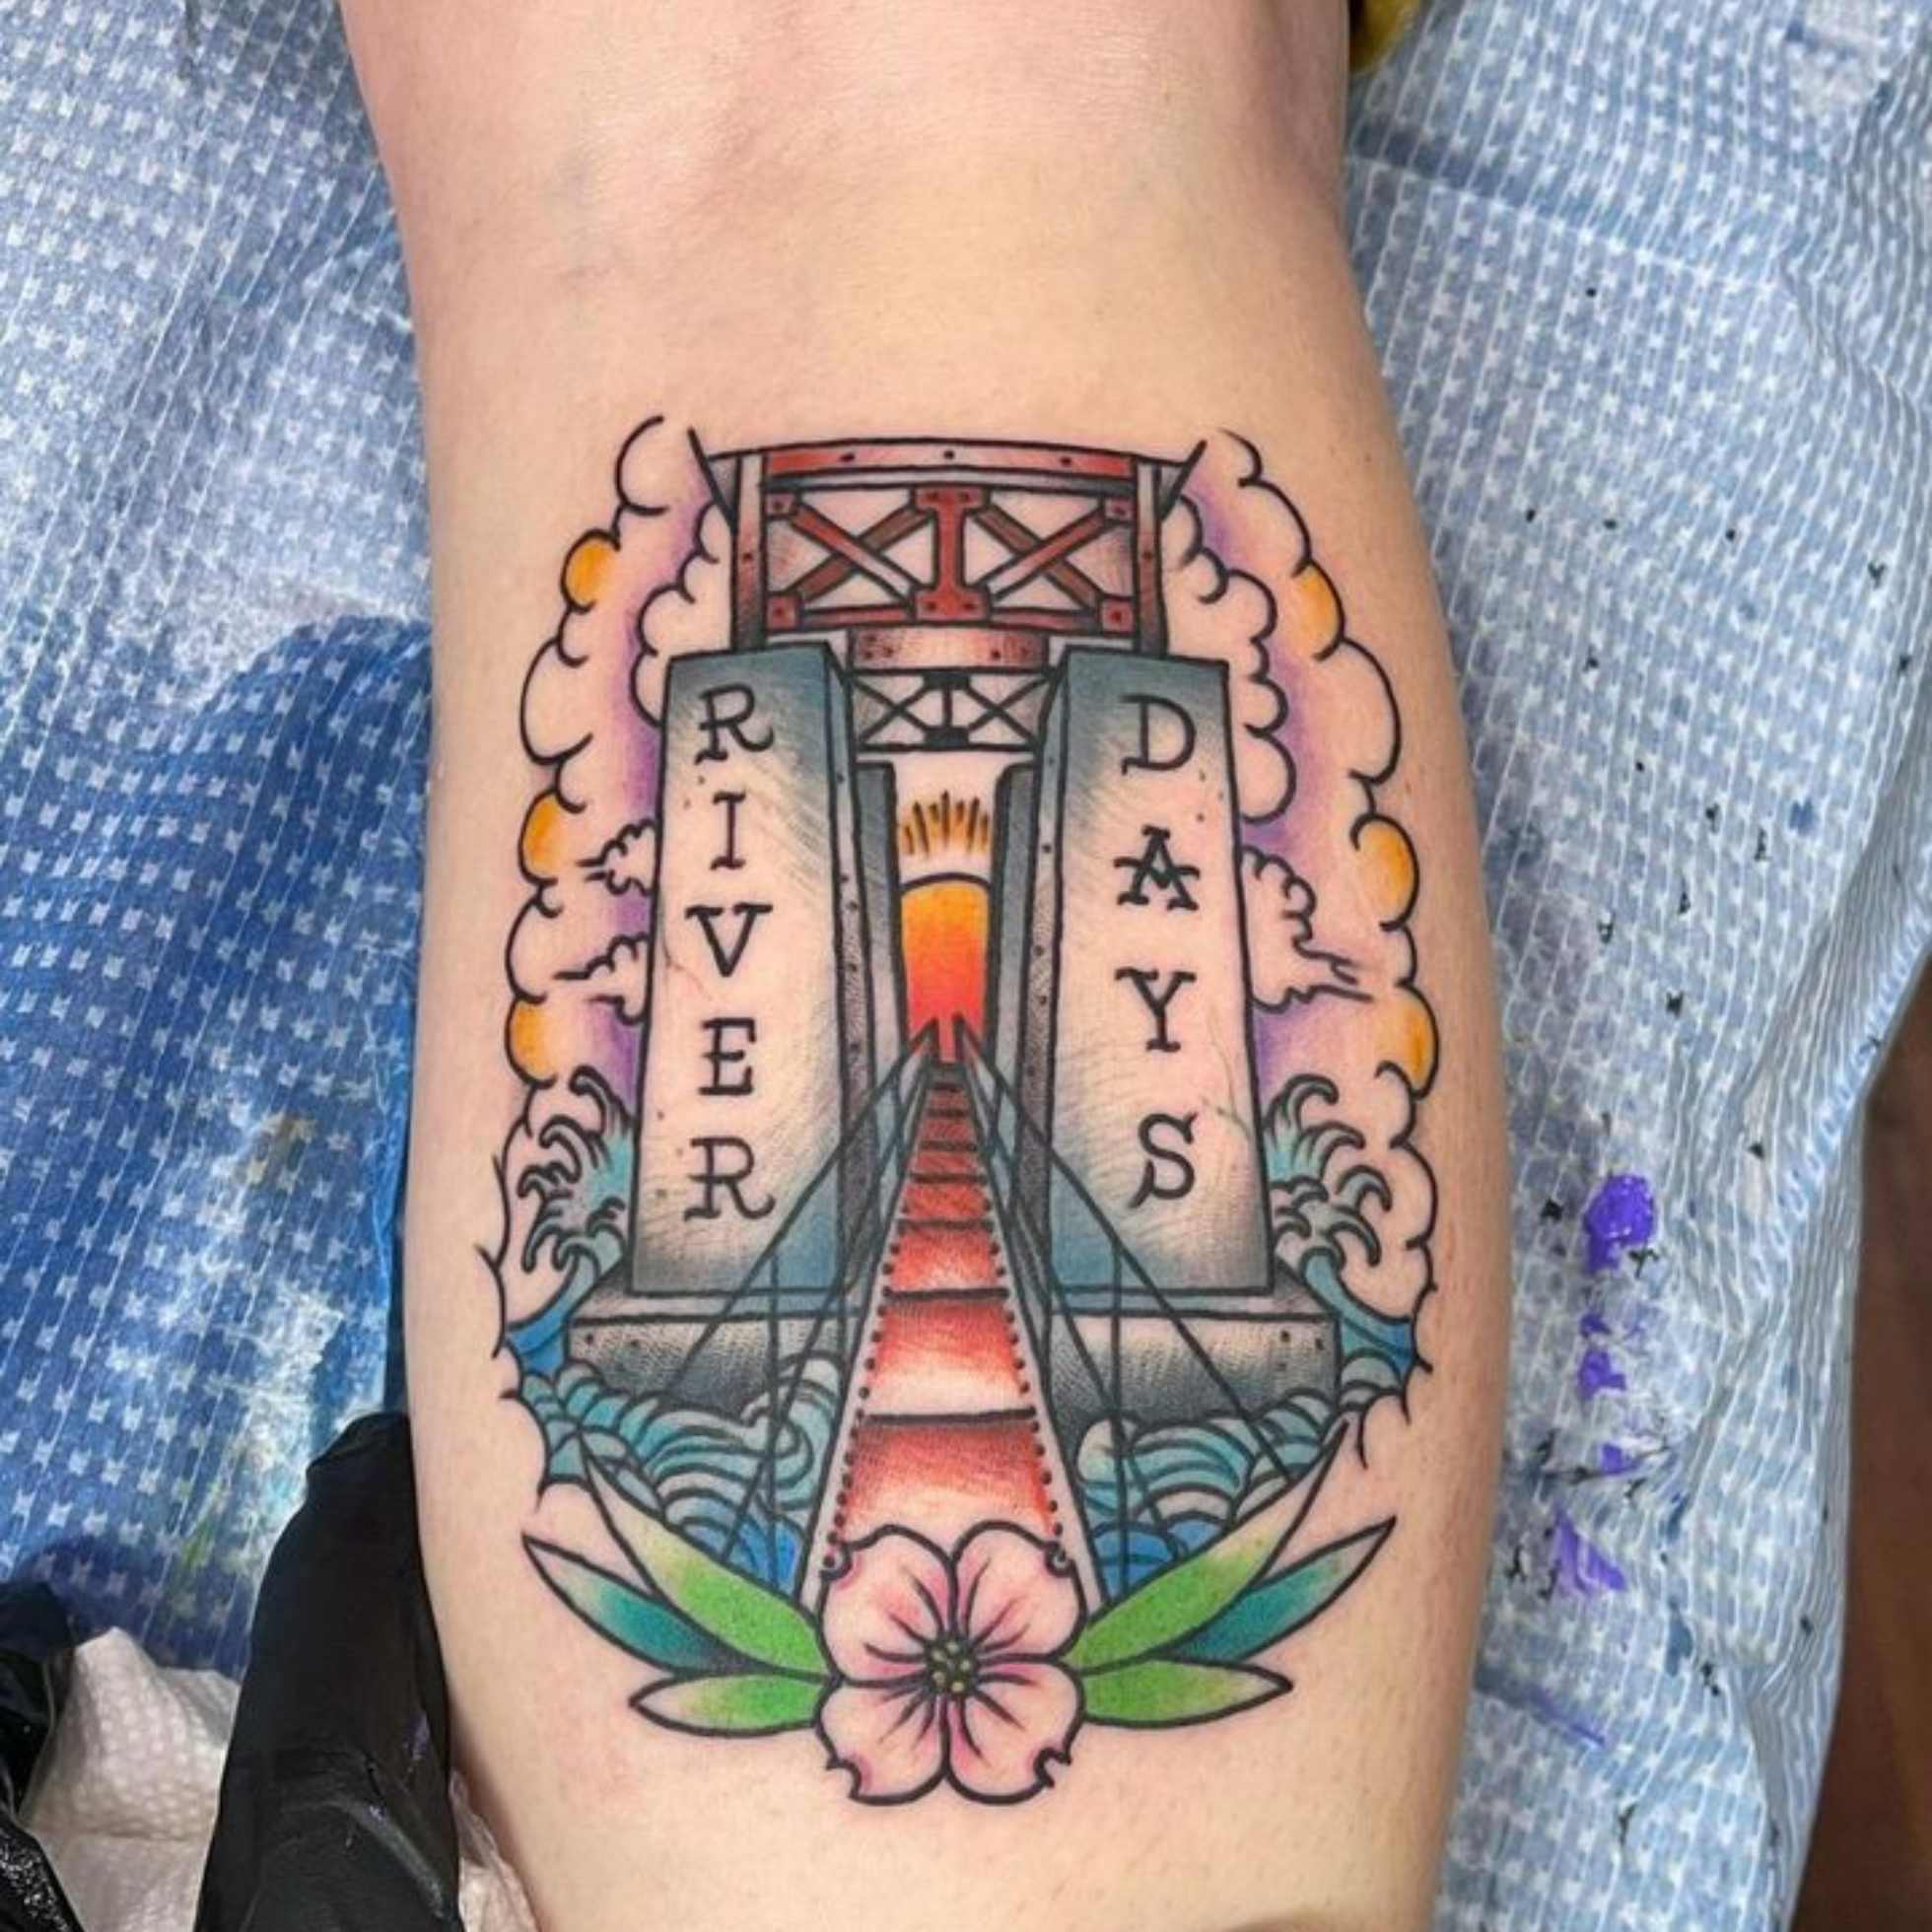 Tattoo sleeve done by Darren Brauders owner of Colourworks Tattoo, Dublin,  Ireland on me. : r/tattoos